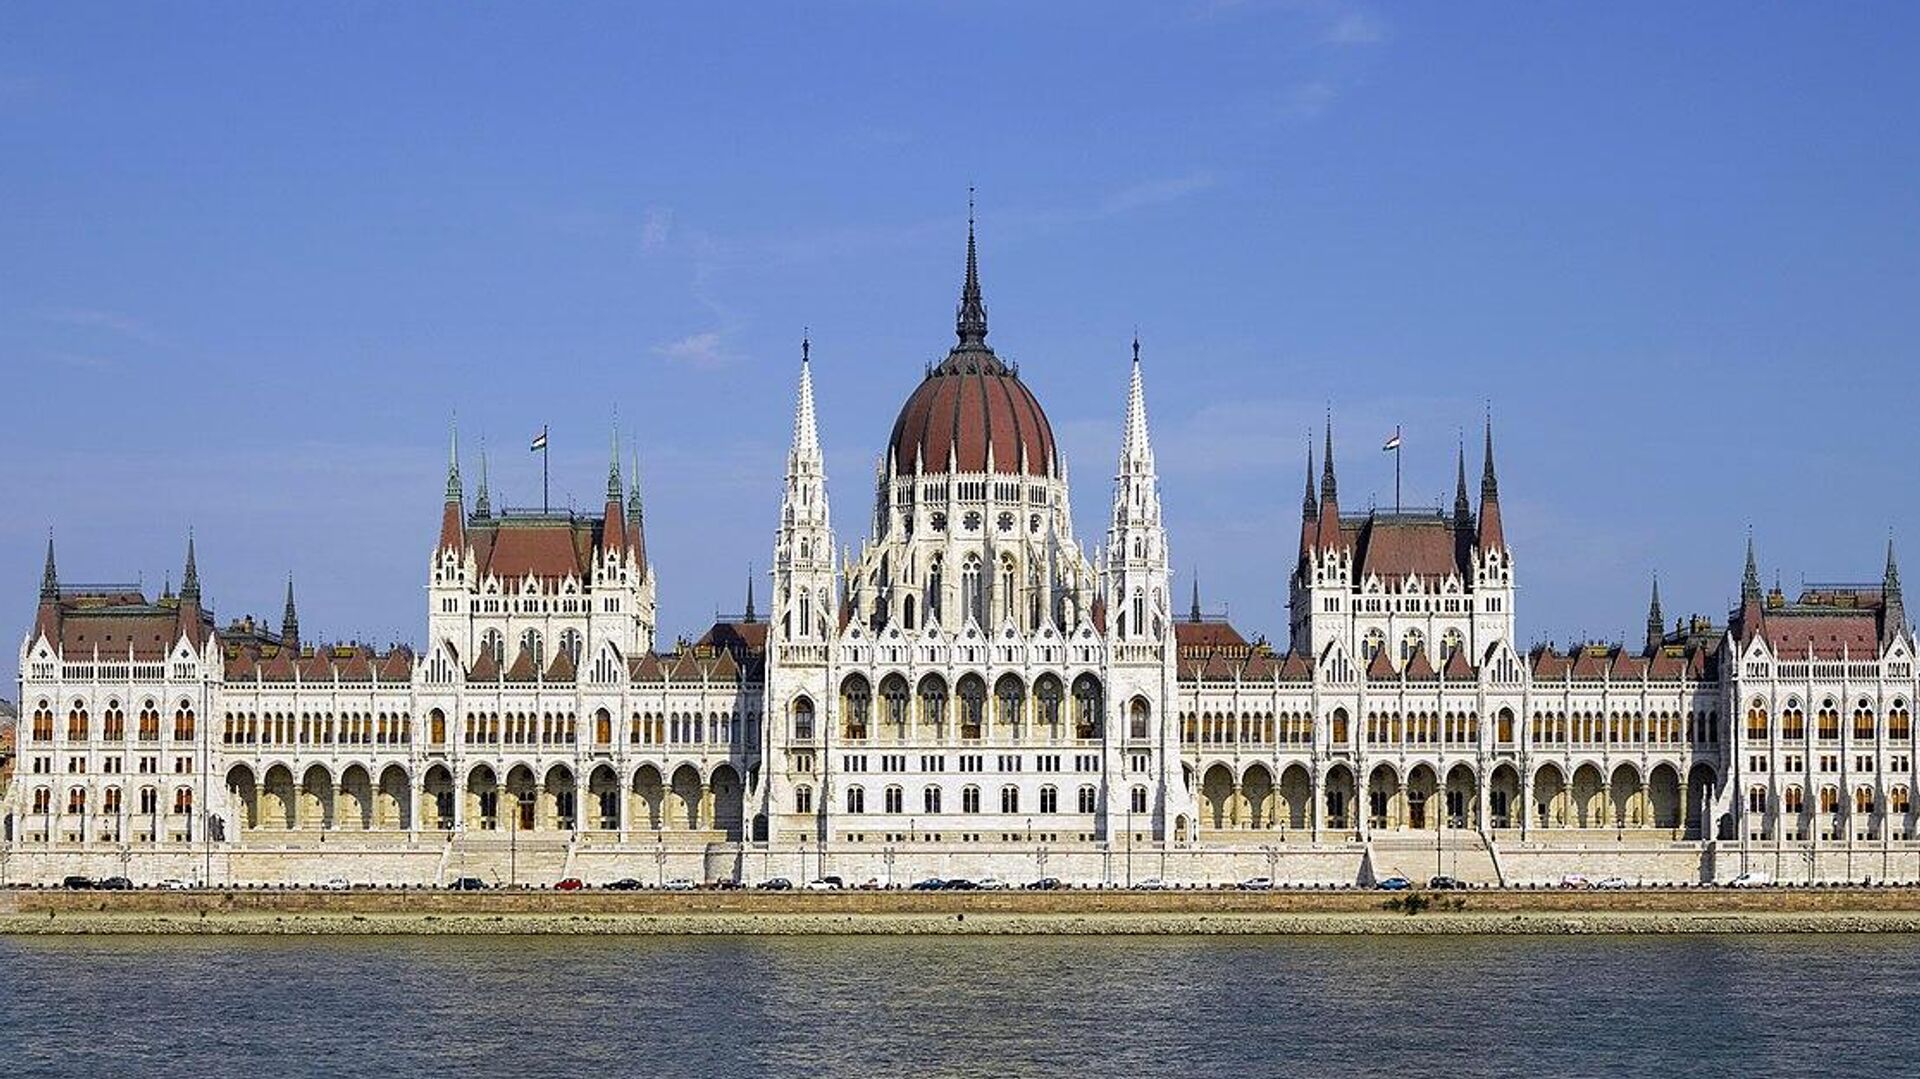 Здание парламента в Будапеште. Венгерский парламент в Будапеште. Парламентский дворец в Будапеште. Венгрия столица Будапешт.